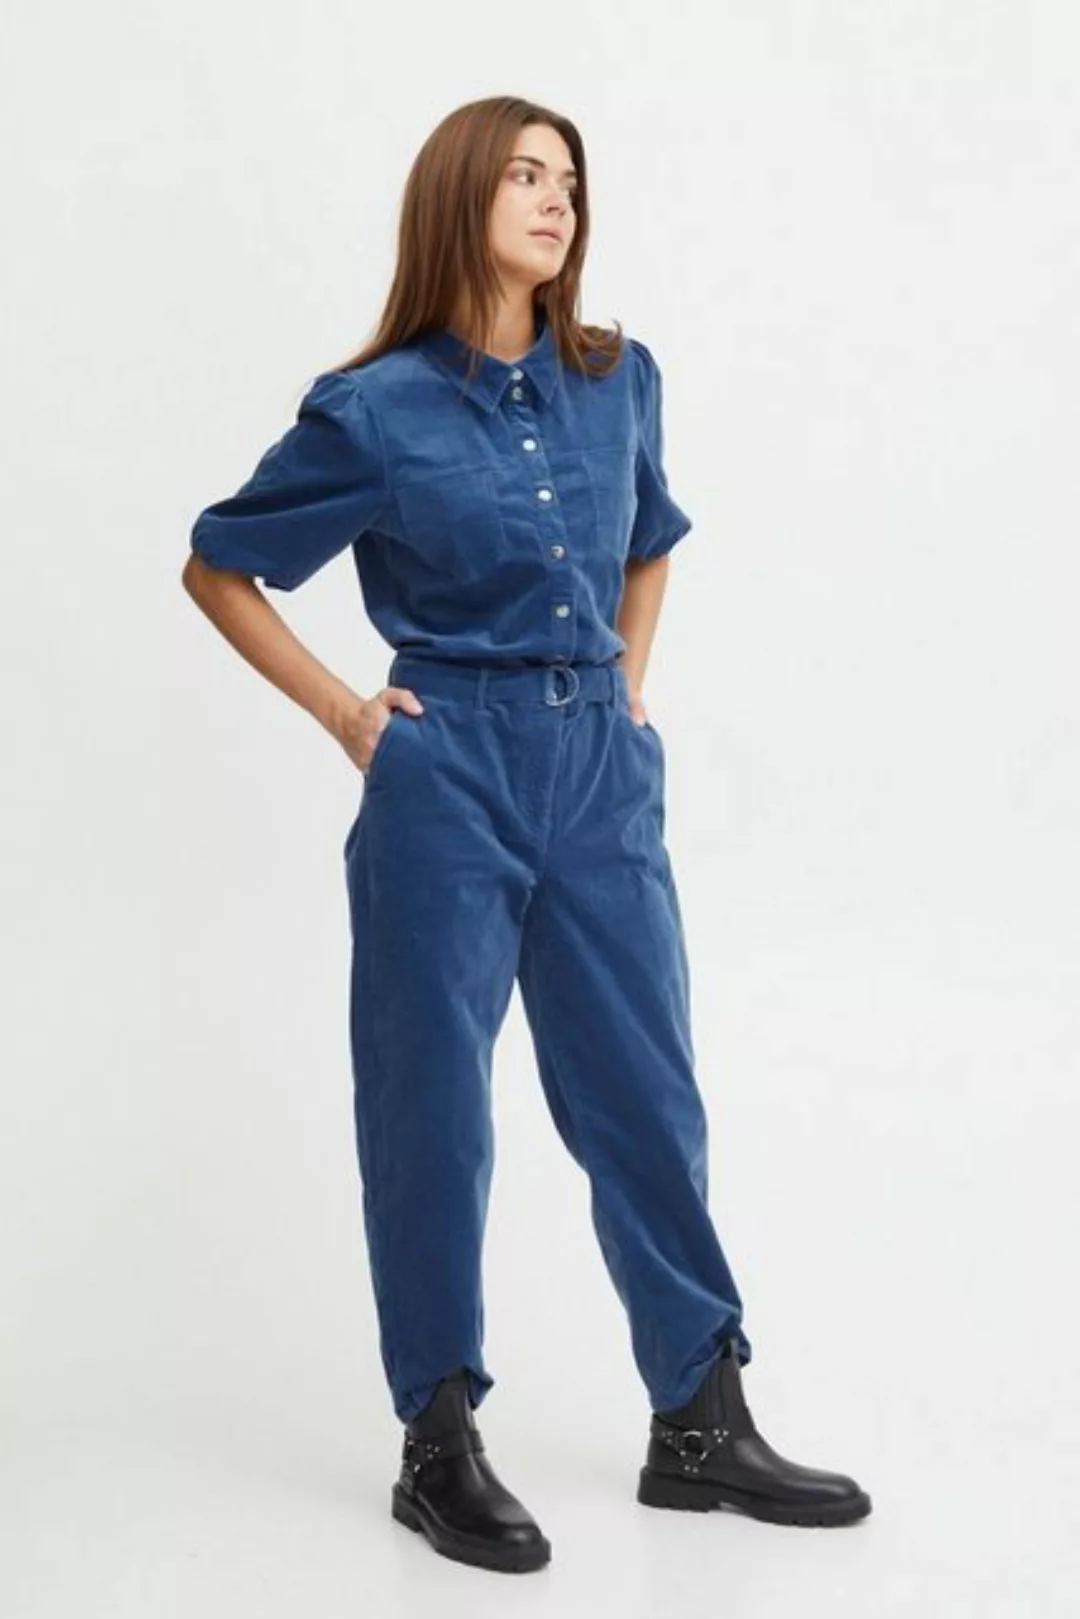 Pulz Jeans Jumpsuit PZSALLY Jumpsuit - 50207192 günstig online kaufen